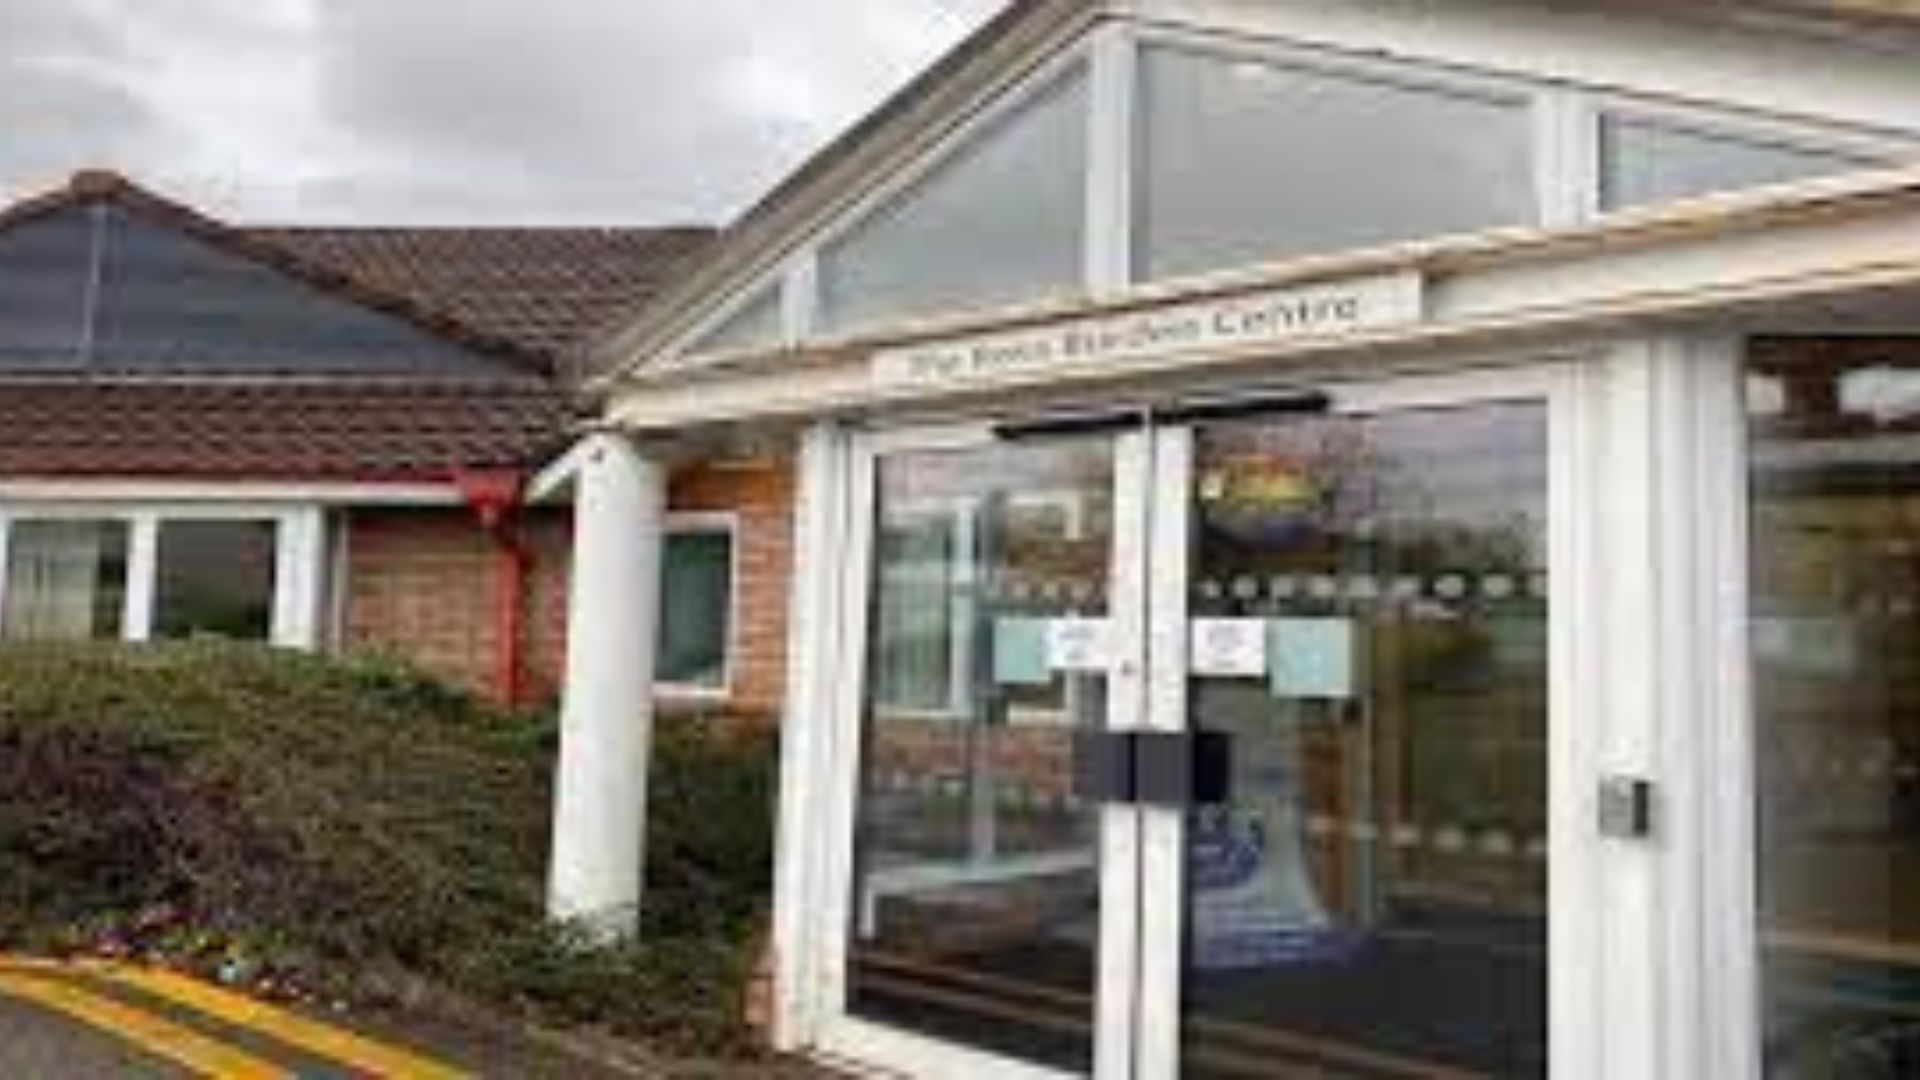 Rosa Burden Centre neurorehab centre at Southmead Hospital in Bristol